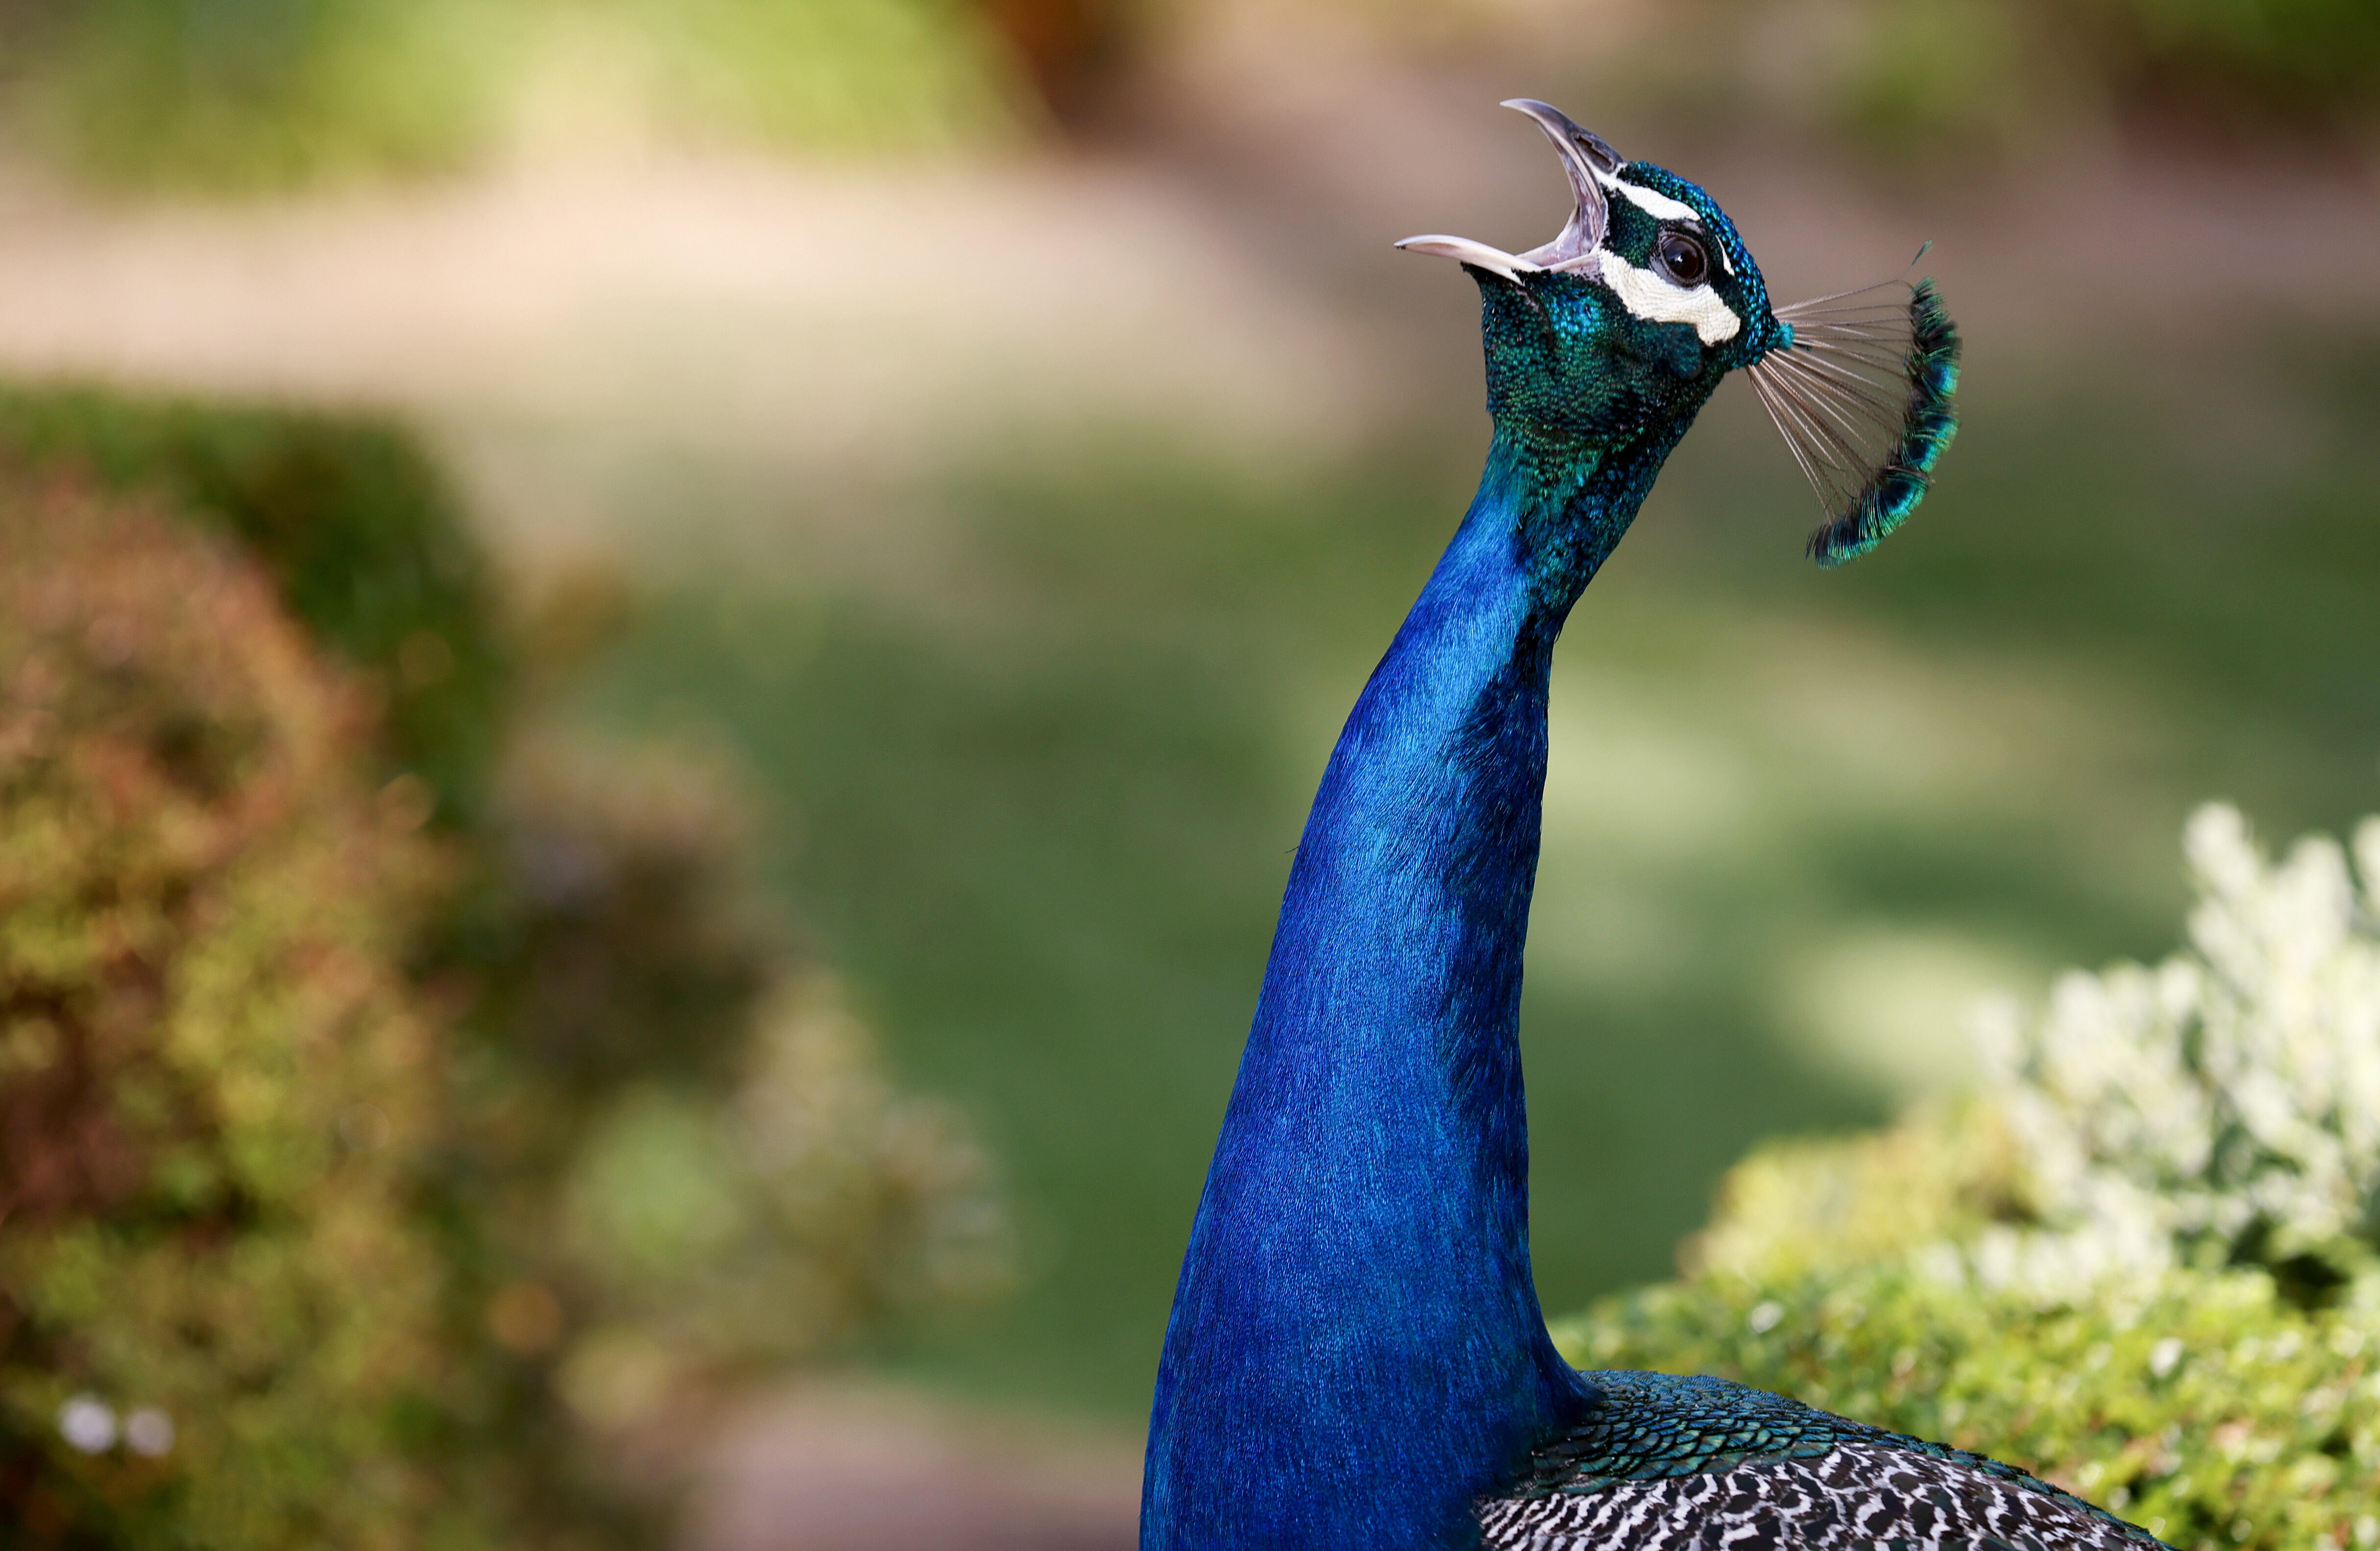 Wild Peacocks Terrorizing La Residents Prompting Call To Ban Feeding Them Iheart 